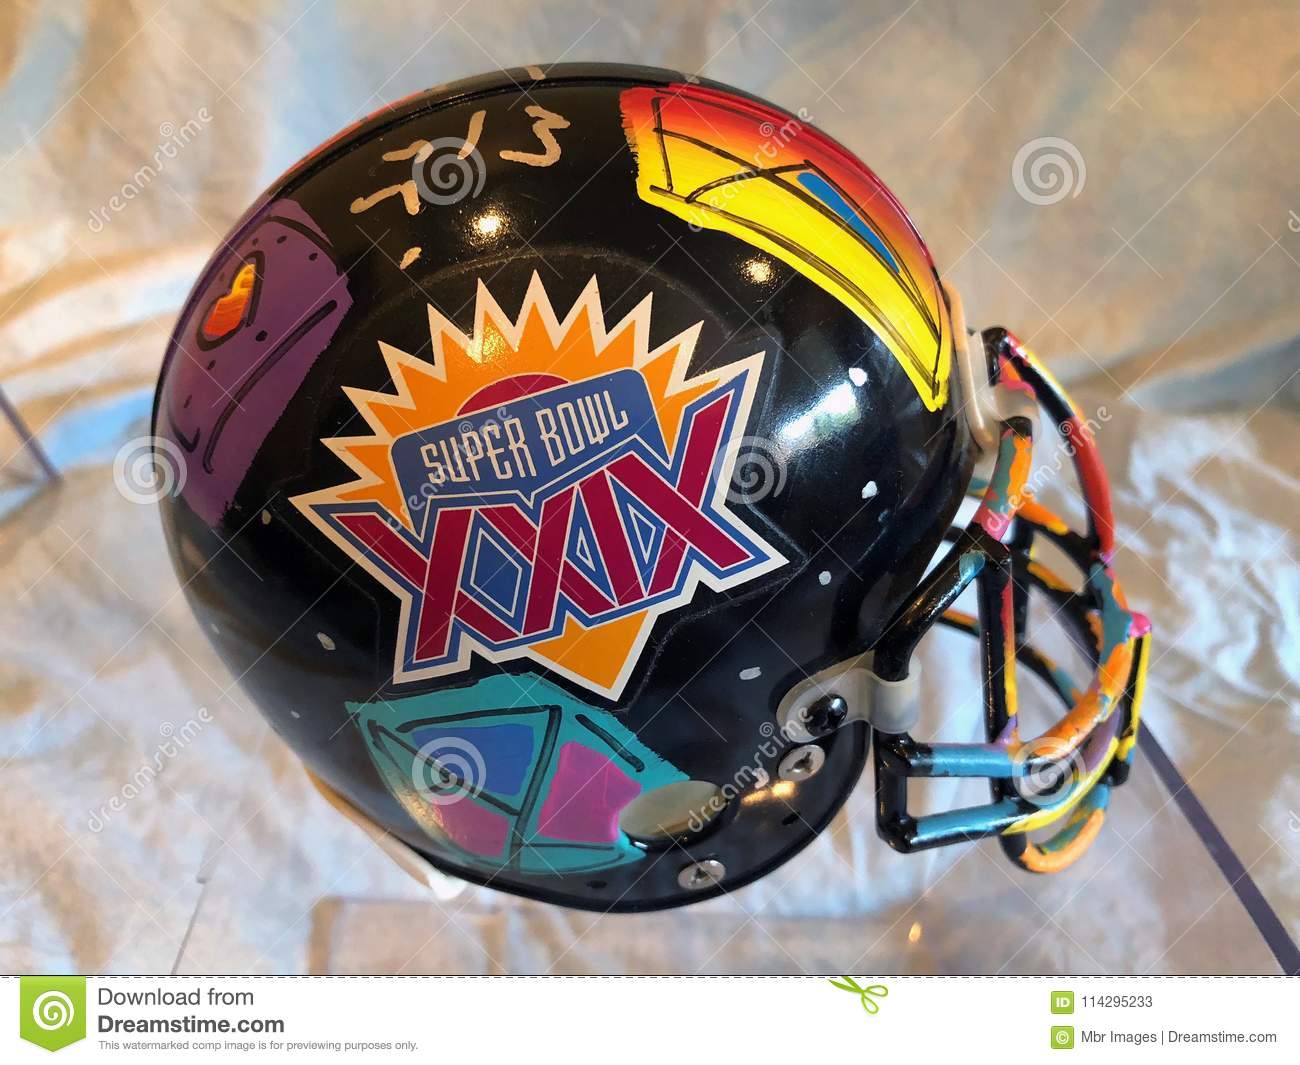 Super Bowl XXIX       Hats